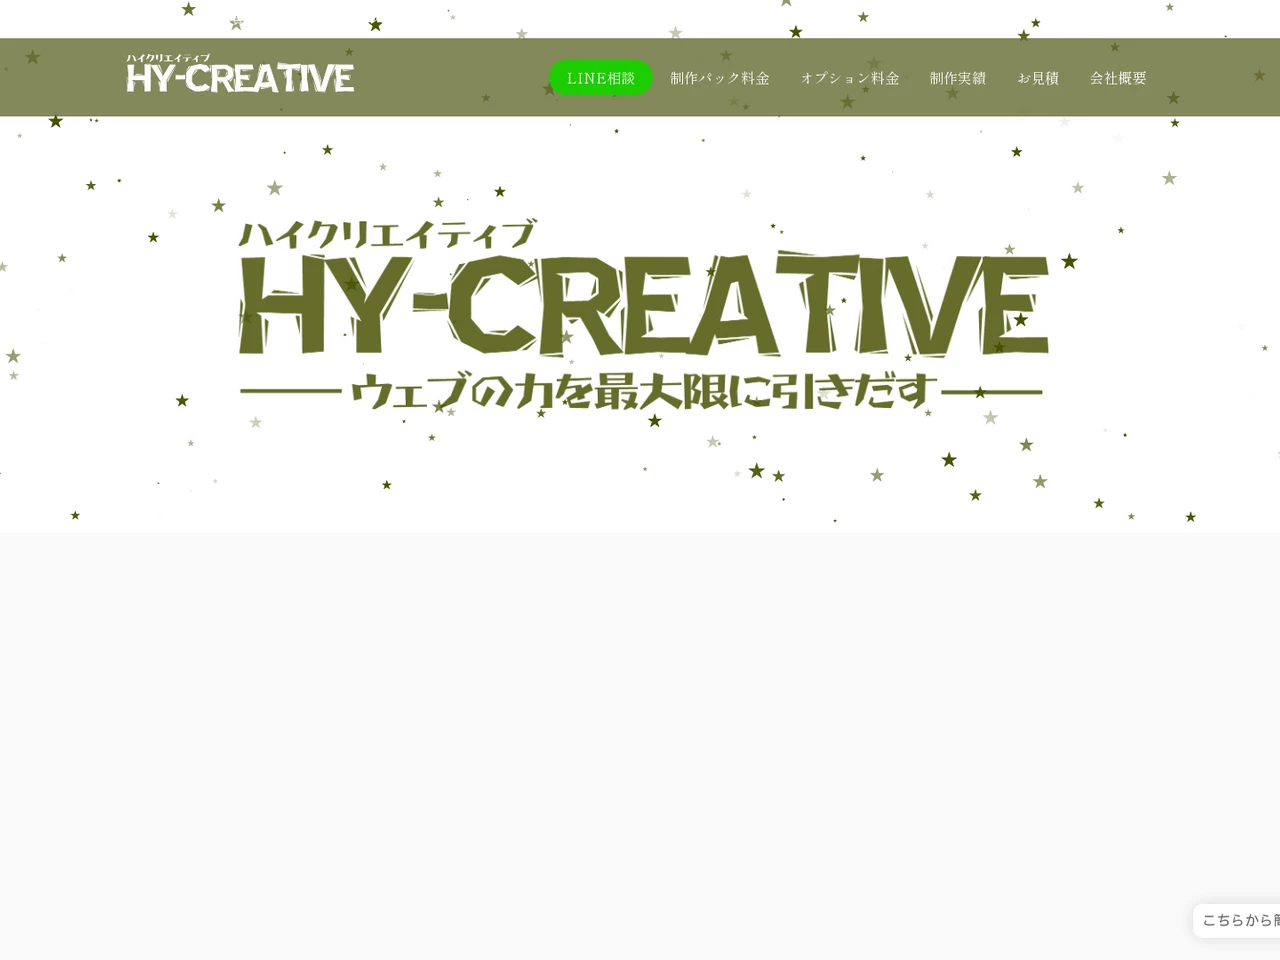 HY-CREATIVE